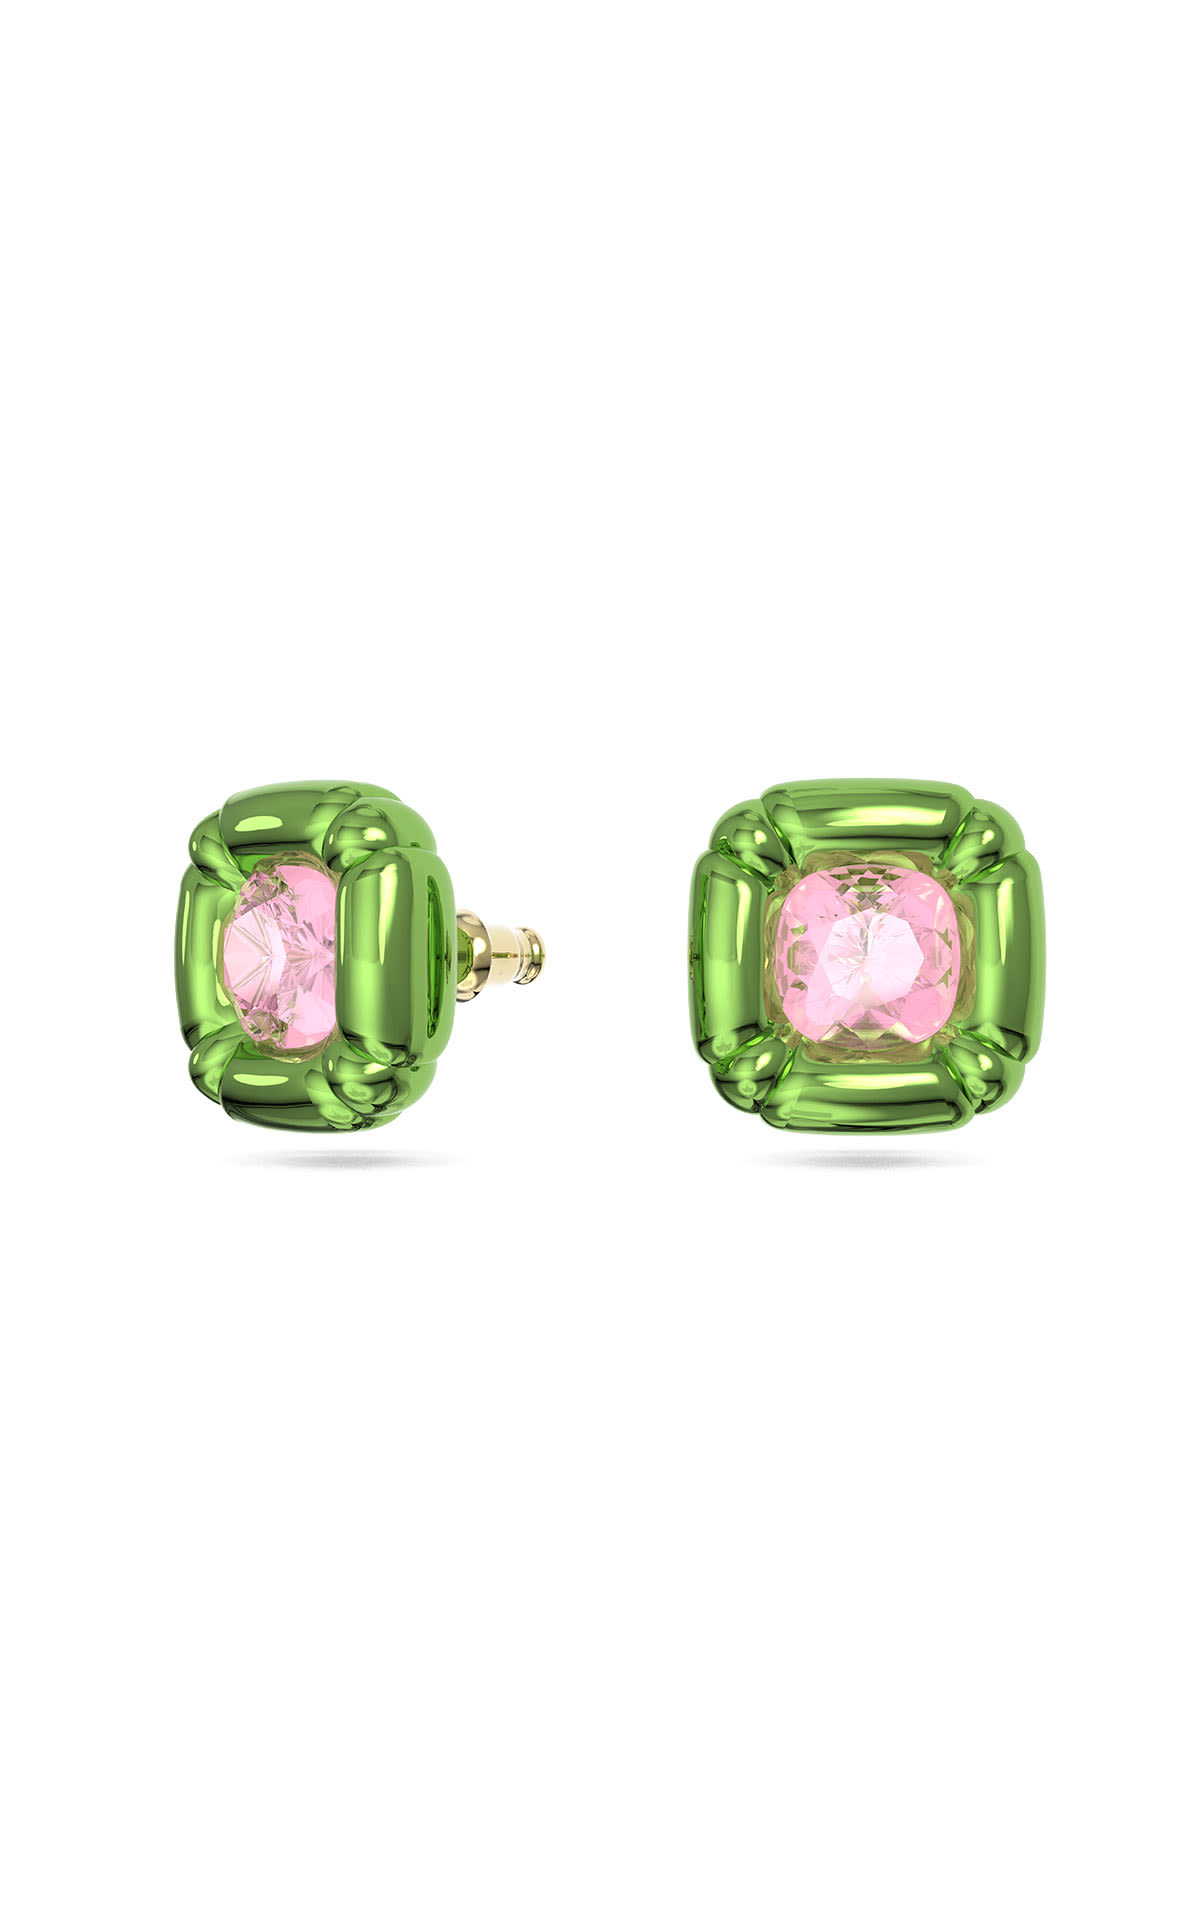 Green button earrings with pink diamond Swarovksi